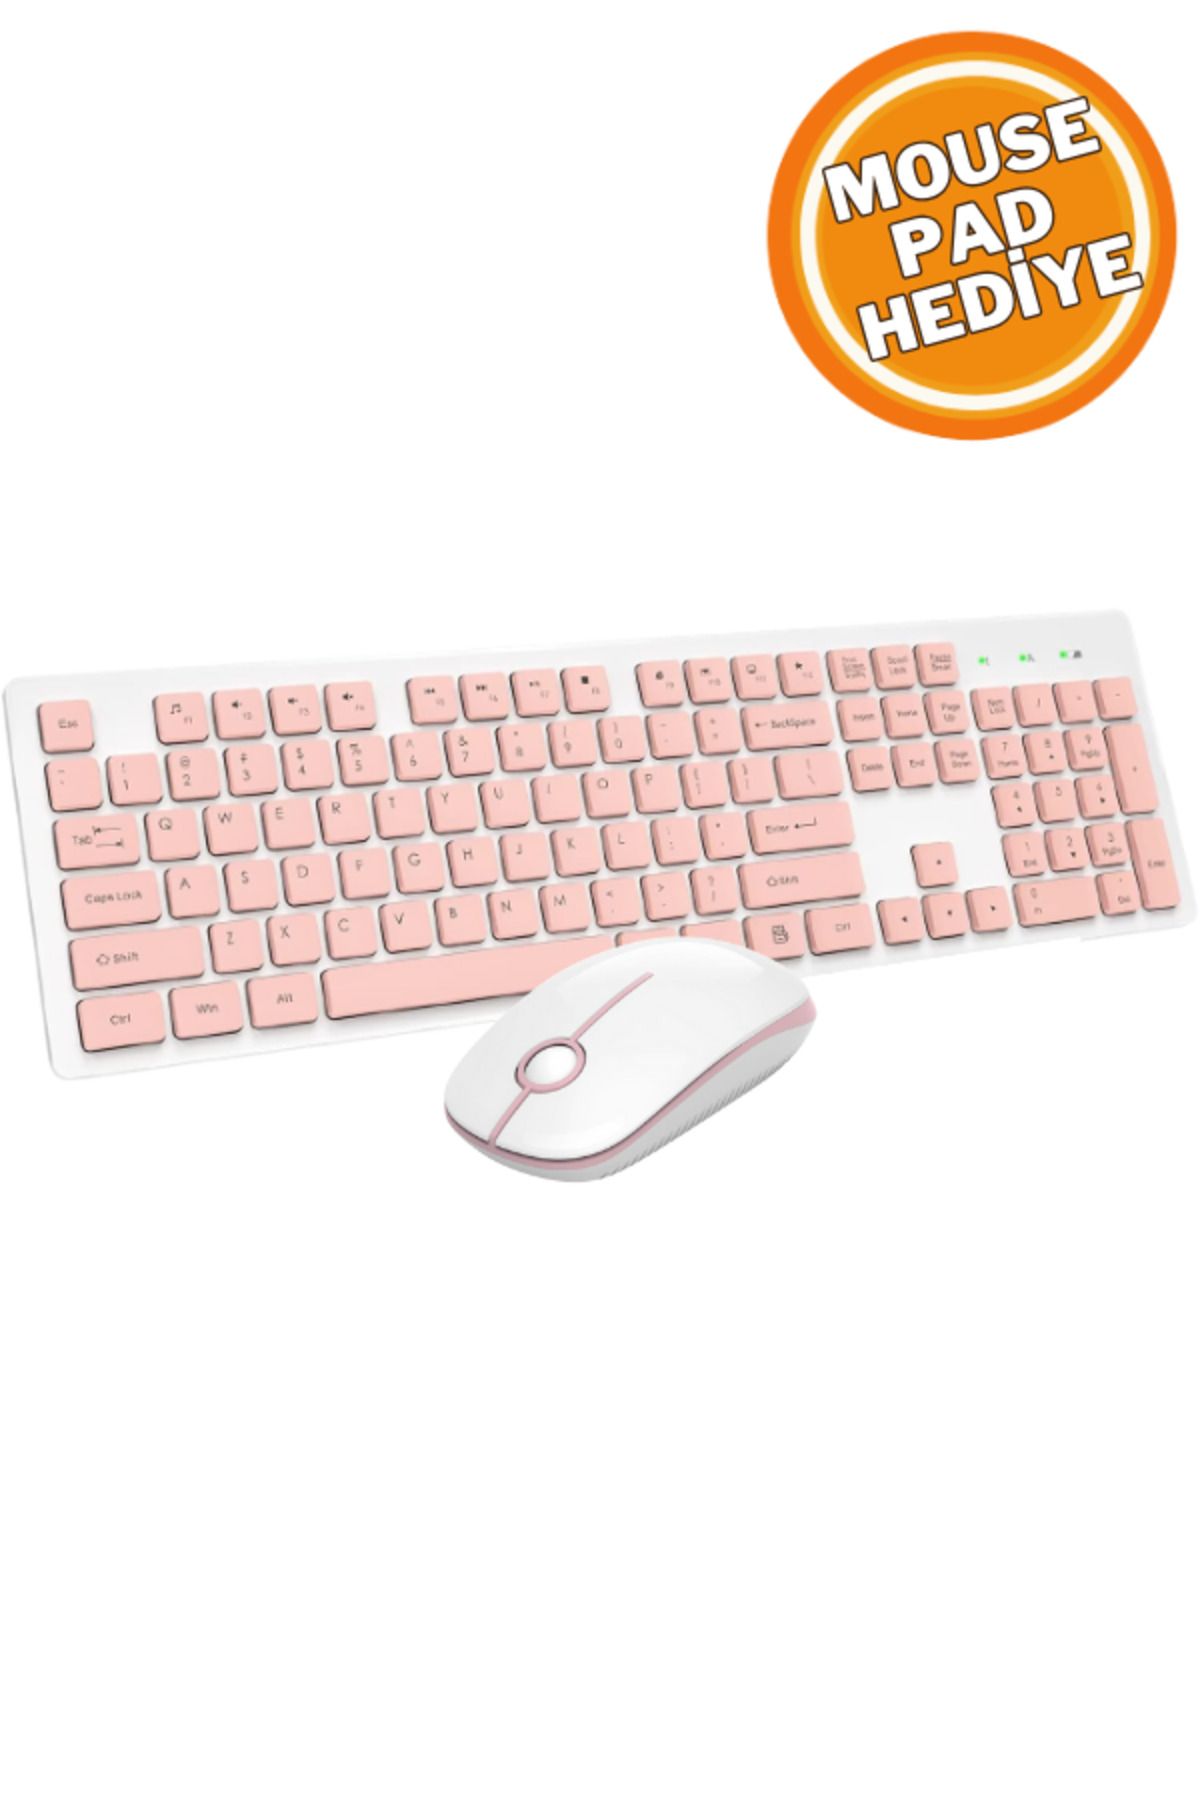 Polygold Slim Klavye Mouse Set Mouse Pad Hediye